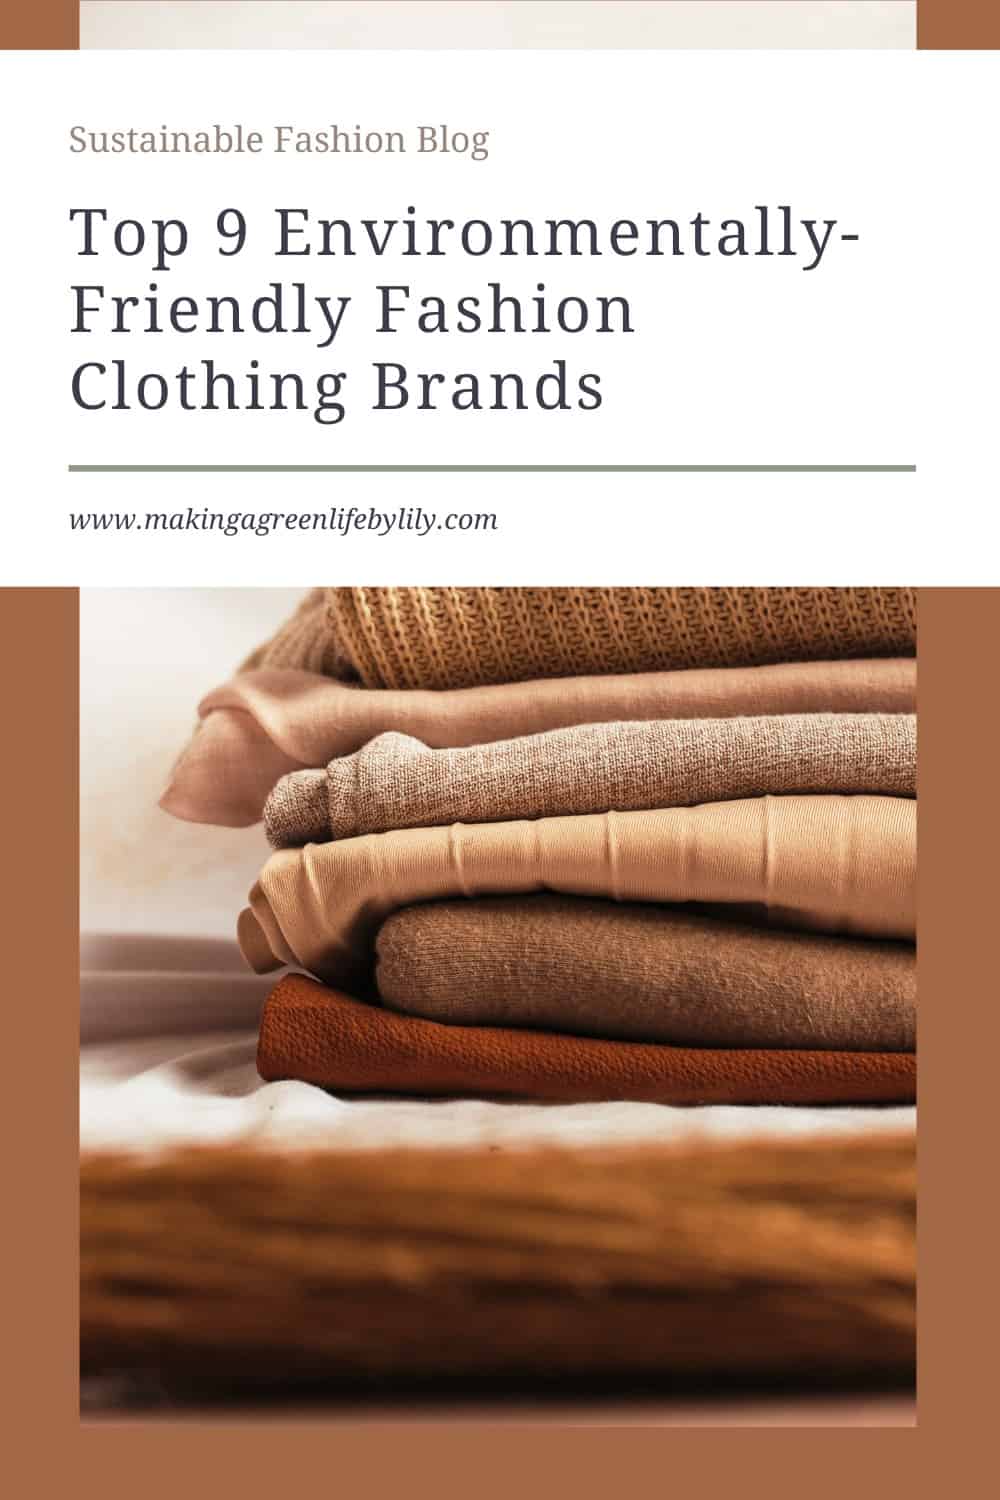 Top 9 Environmentally-Friendly Fashion Clothing Brands